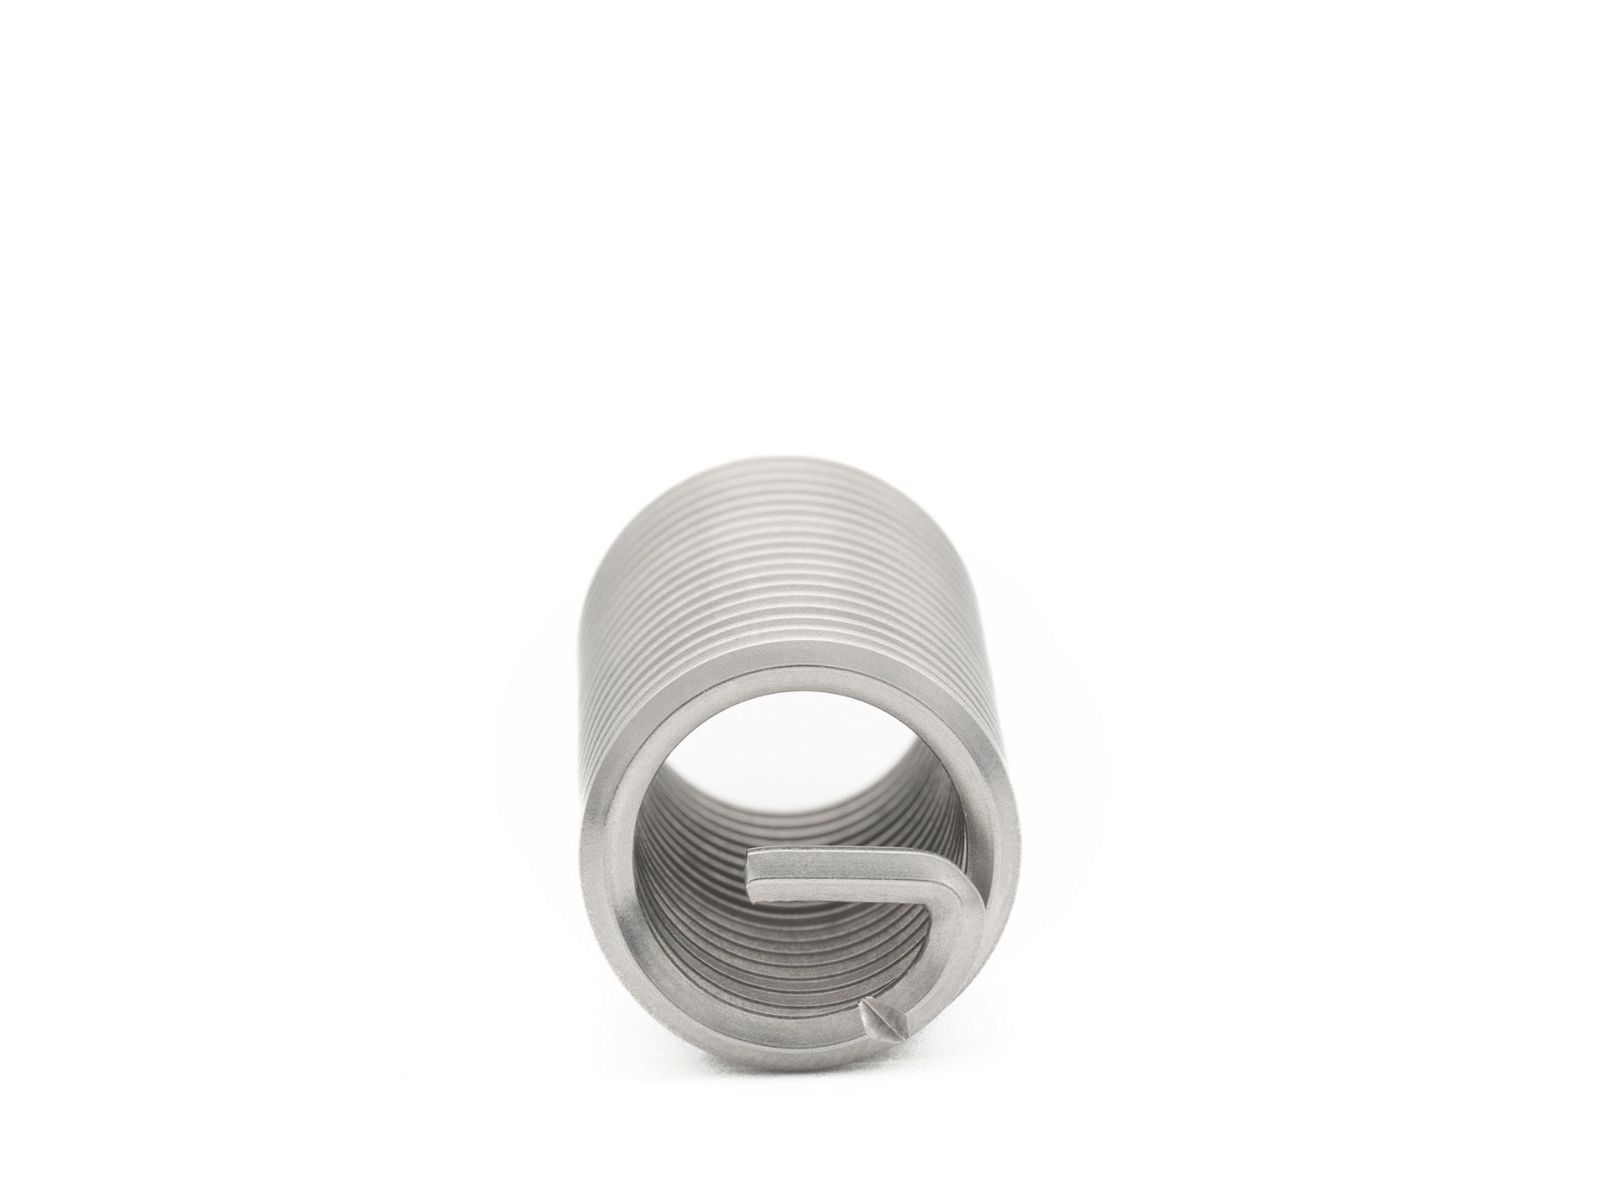 BaerCoil Wire Thread Inserts UNC No. 6 x 32 - 3.0 D (10.52 mm) - free running - 100 pcs.